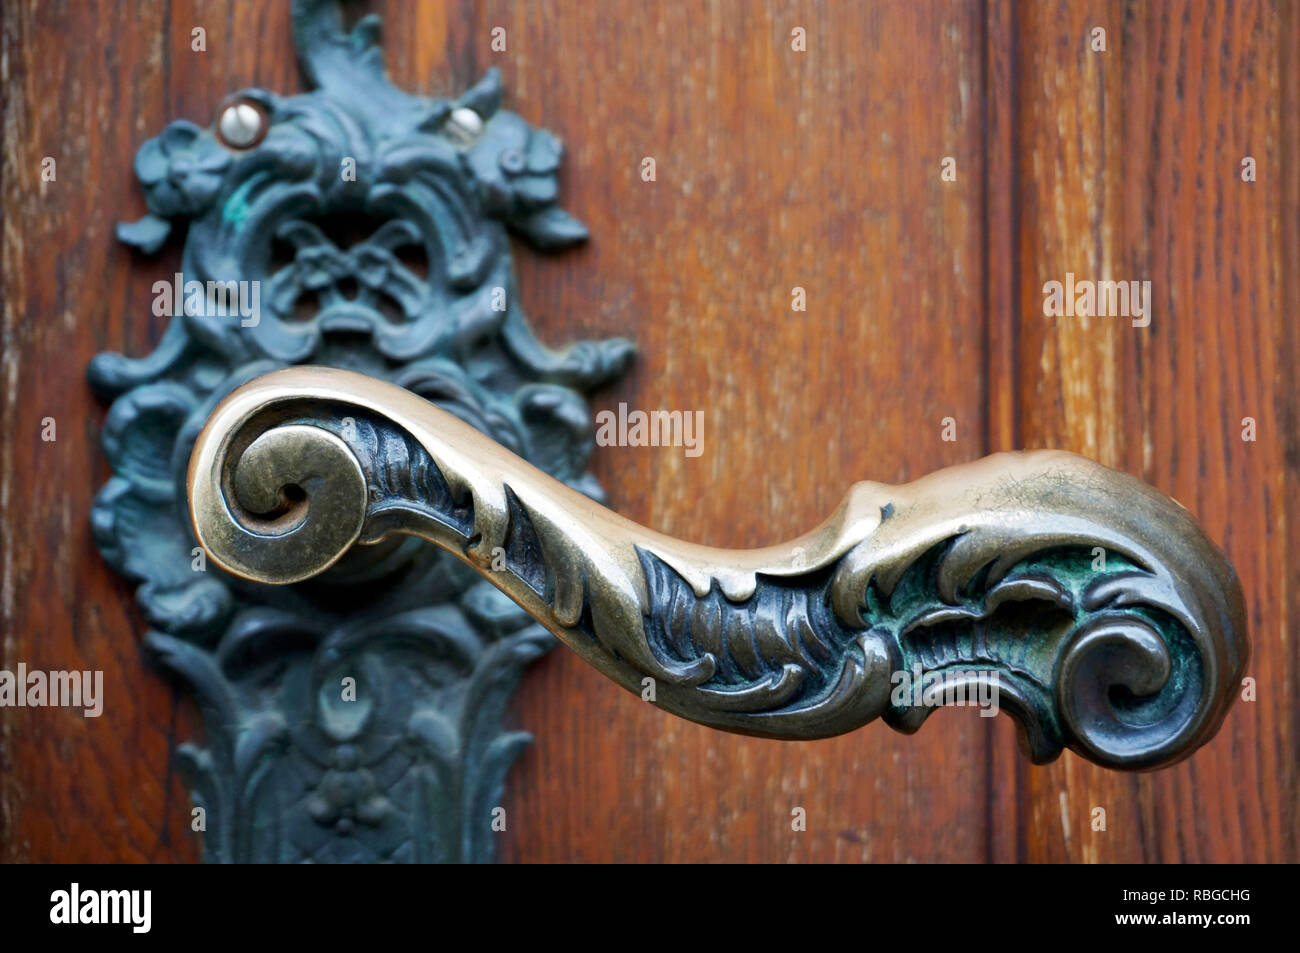 Historic old door knob made of brass Stock Photo